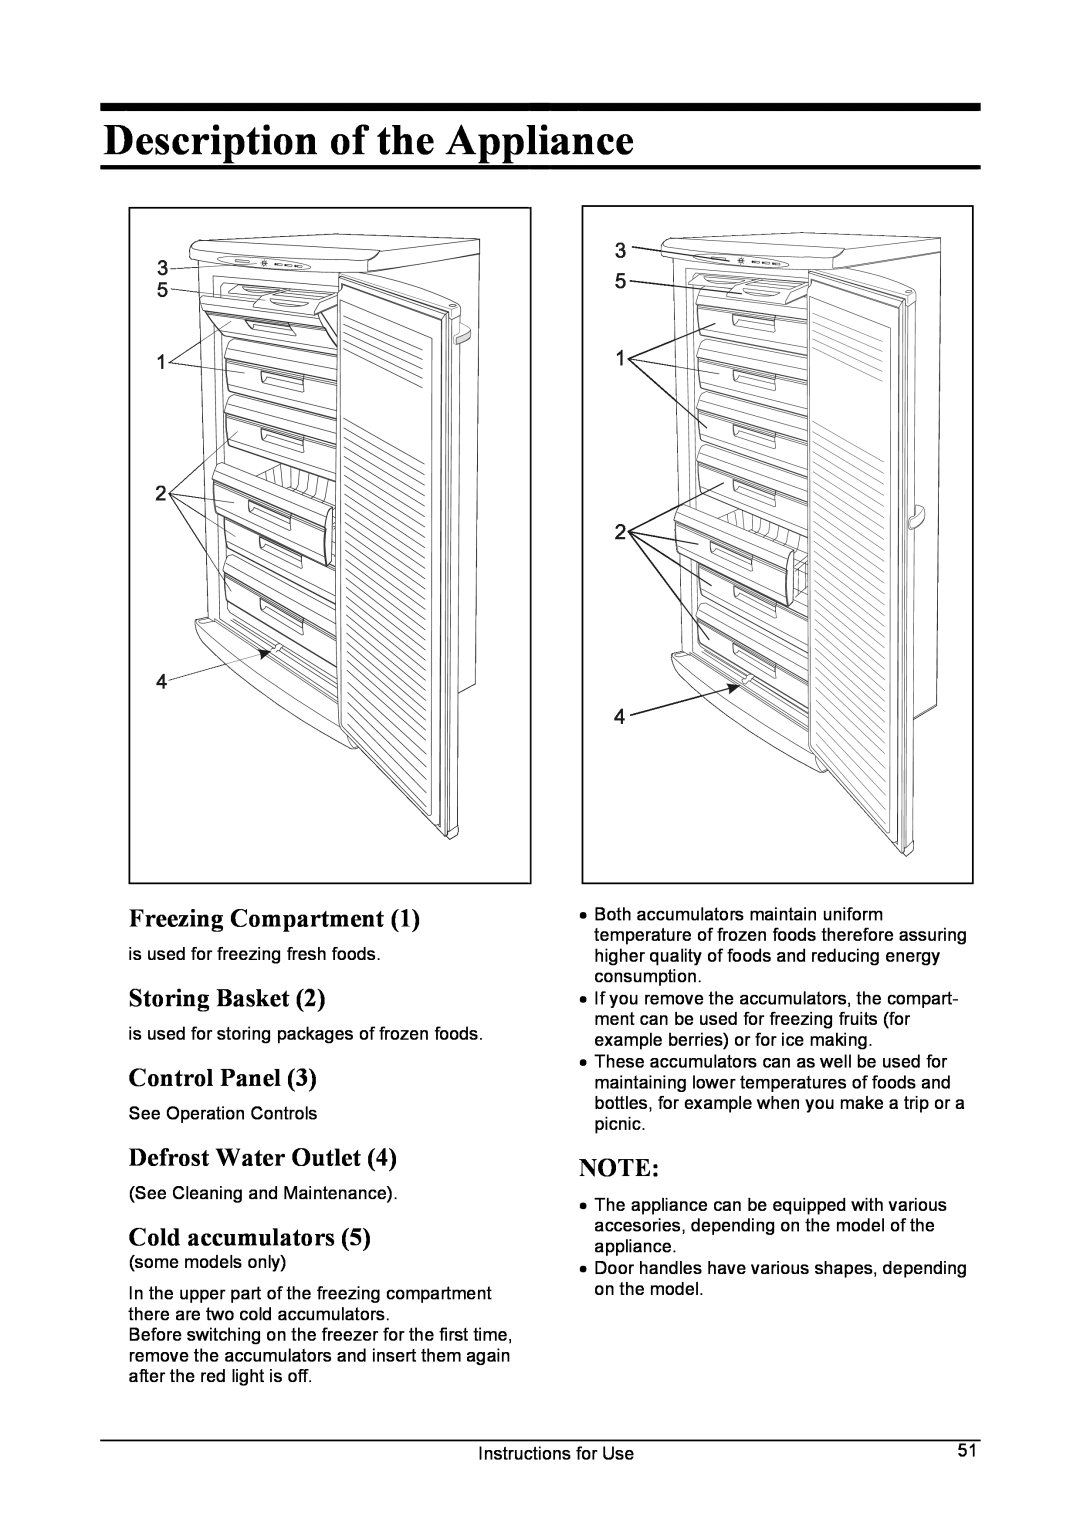 Smeg CV24A manual Description of the Appliance, Freezing Compartment, Storing Basket, Control Panel, Defrost Water Outlet 